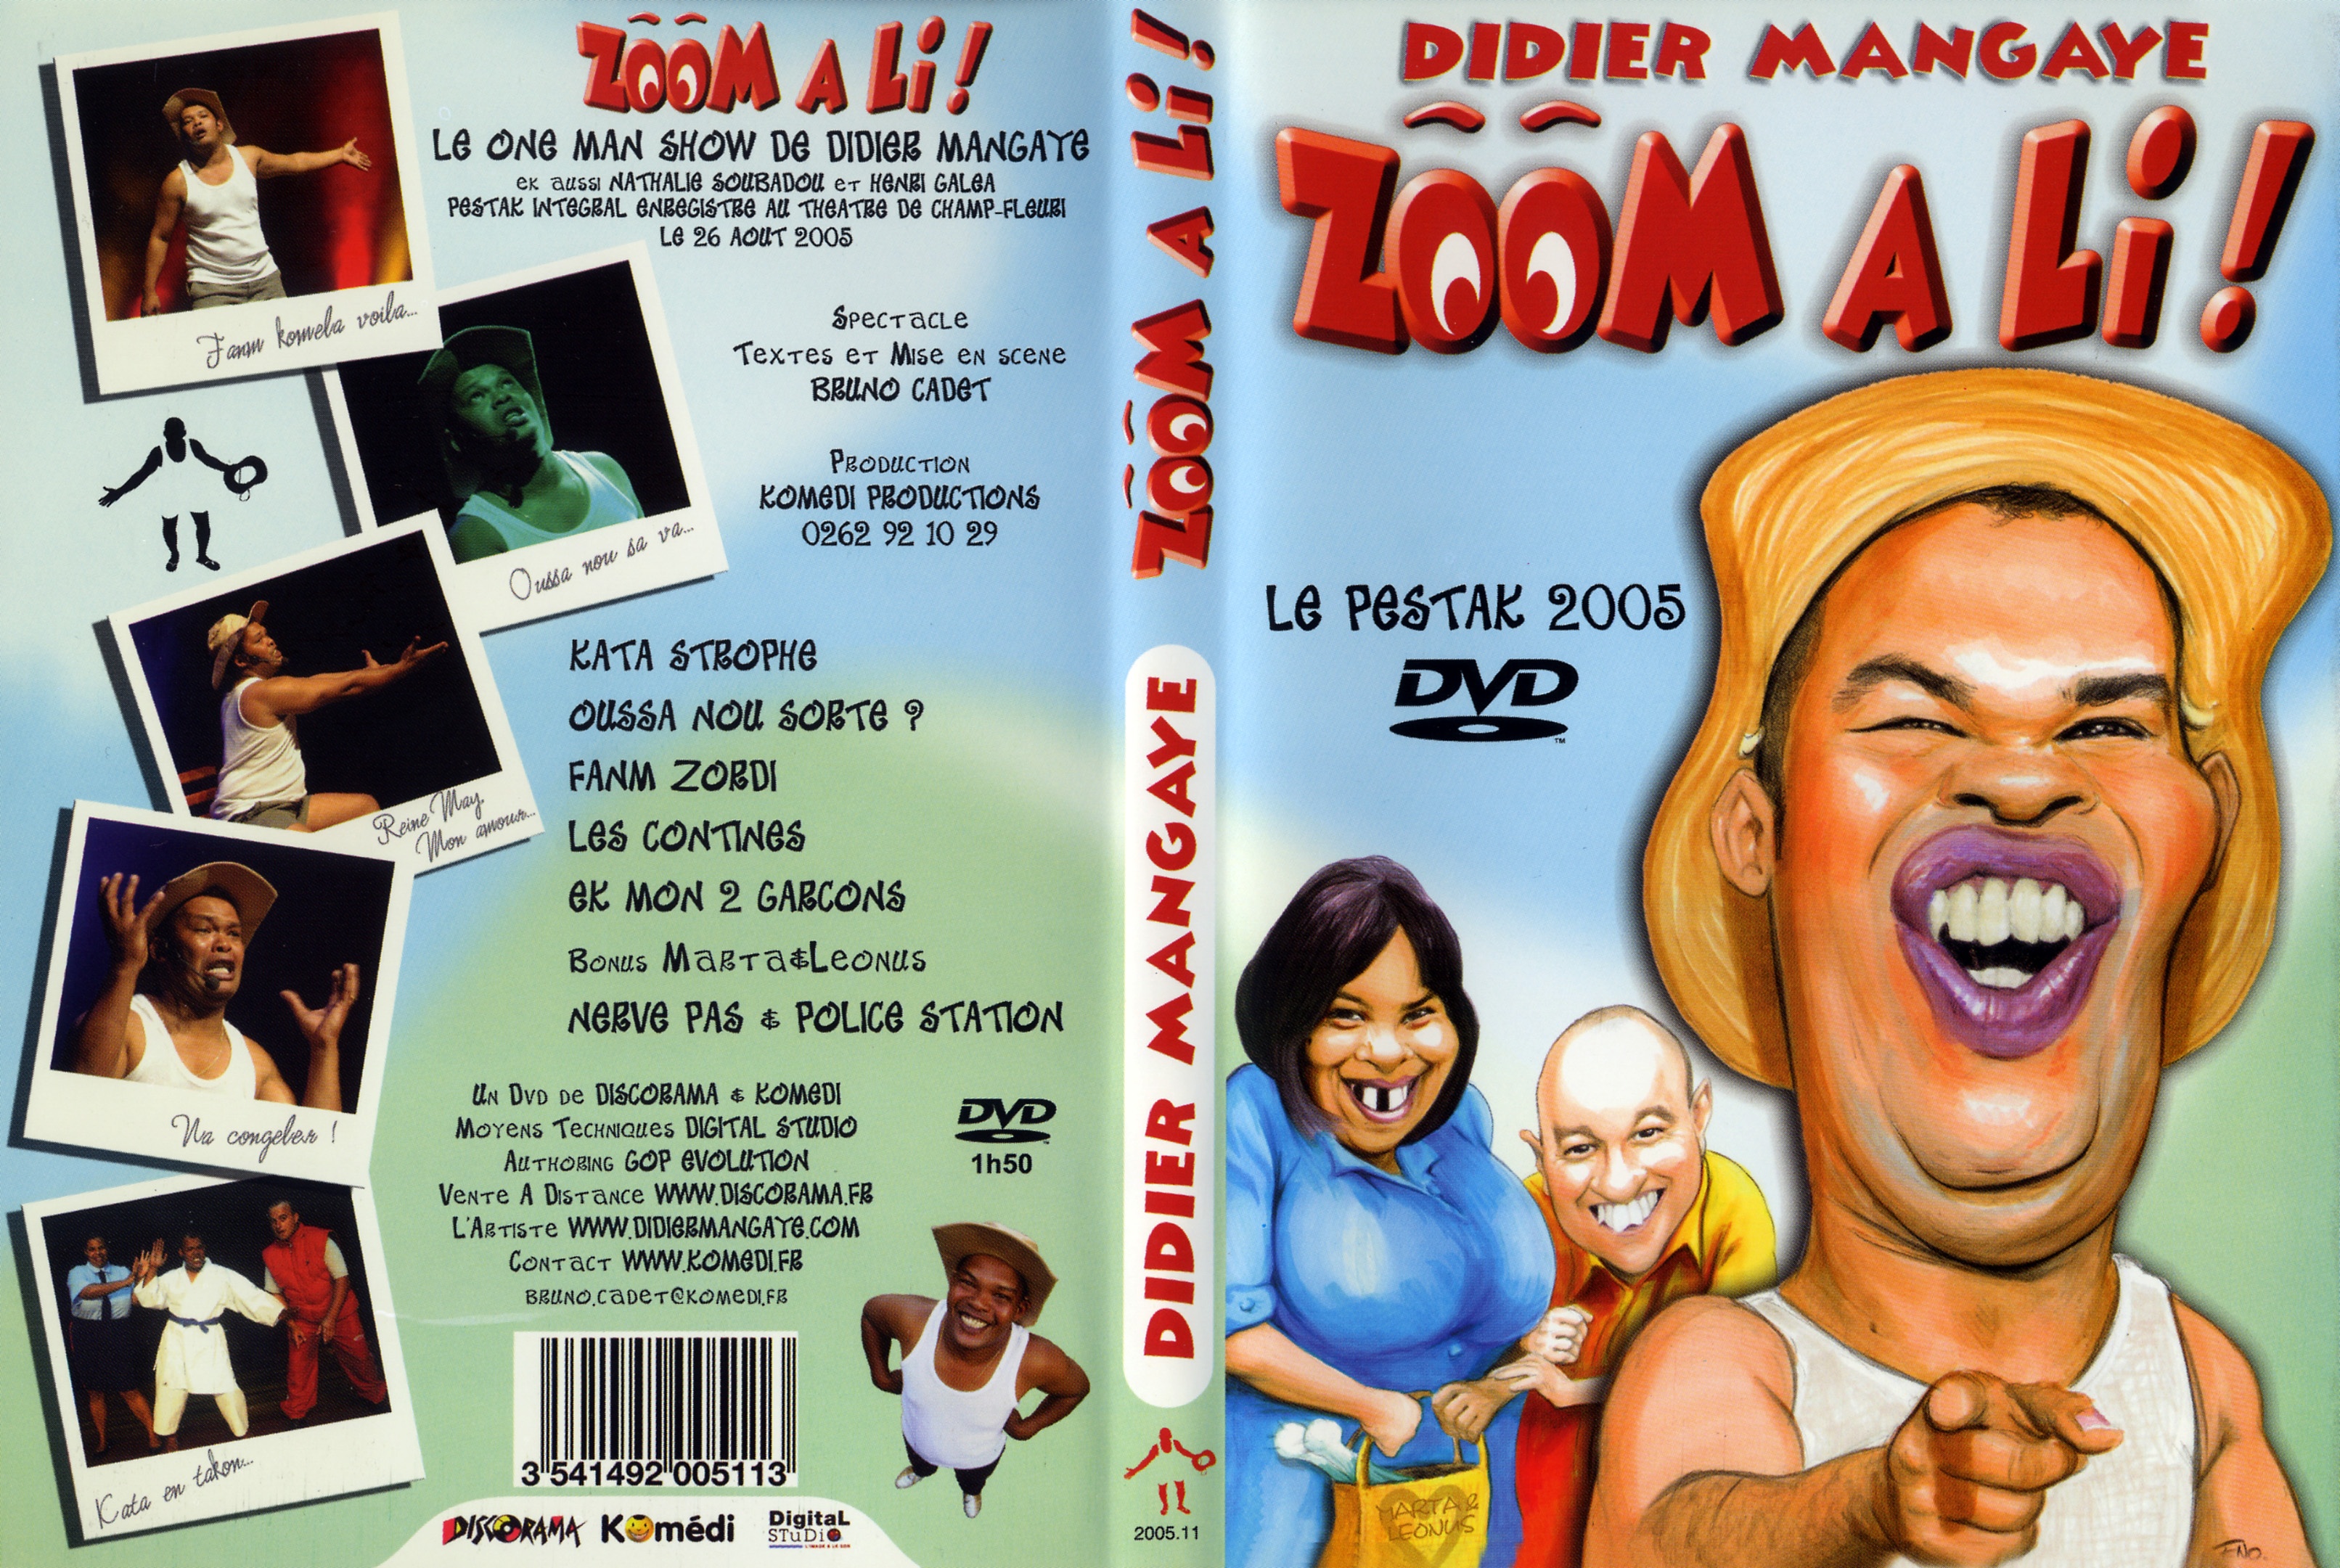 Jaquette DVD Didier Mangaye - Zoom a li